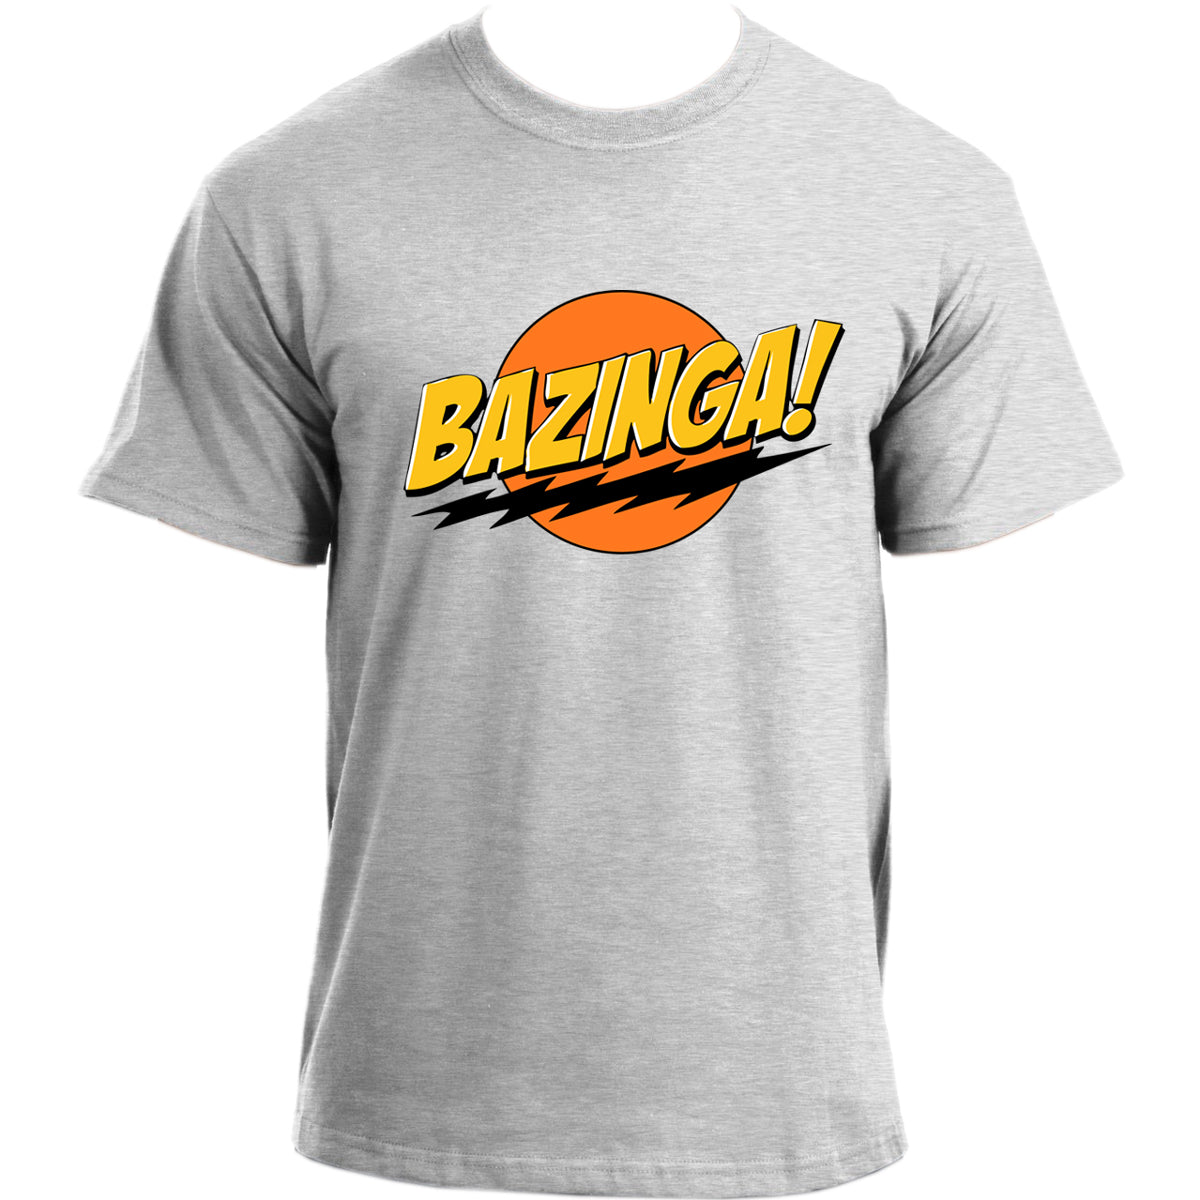 Bazinga Sheldon Cooper The Big Bang Theory Round Bazinga inspired T-Shirt